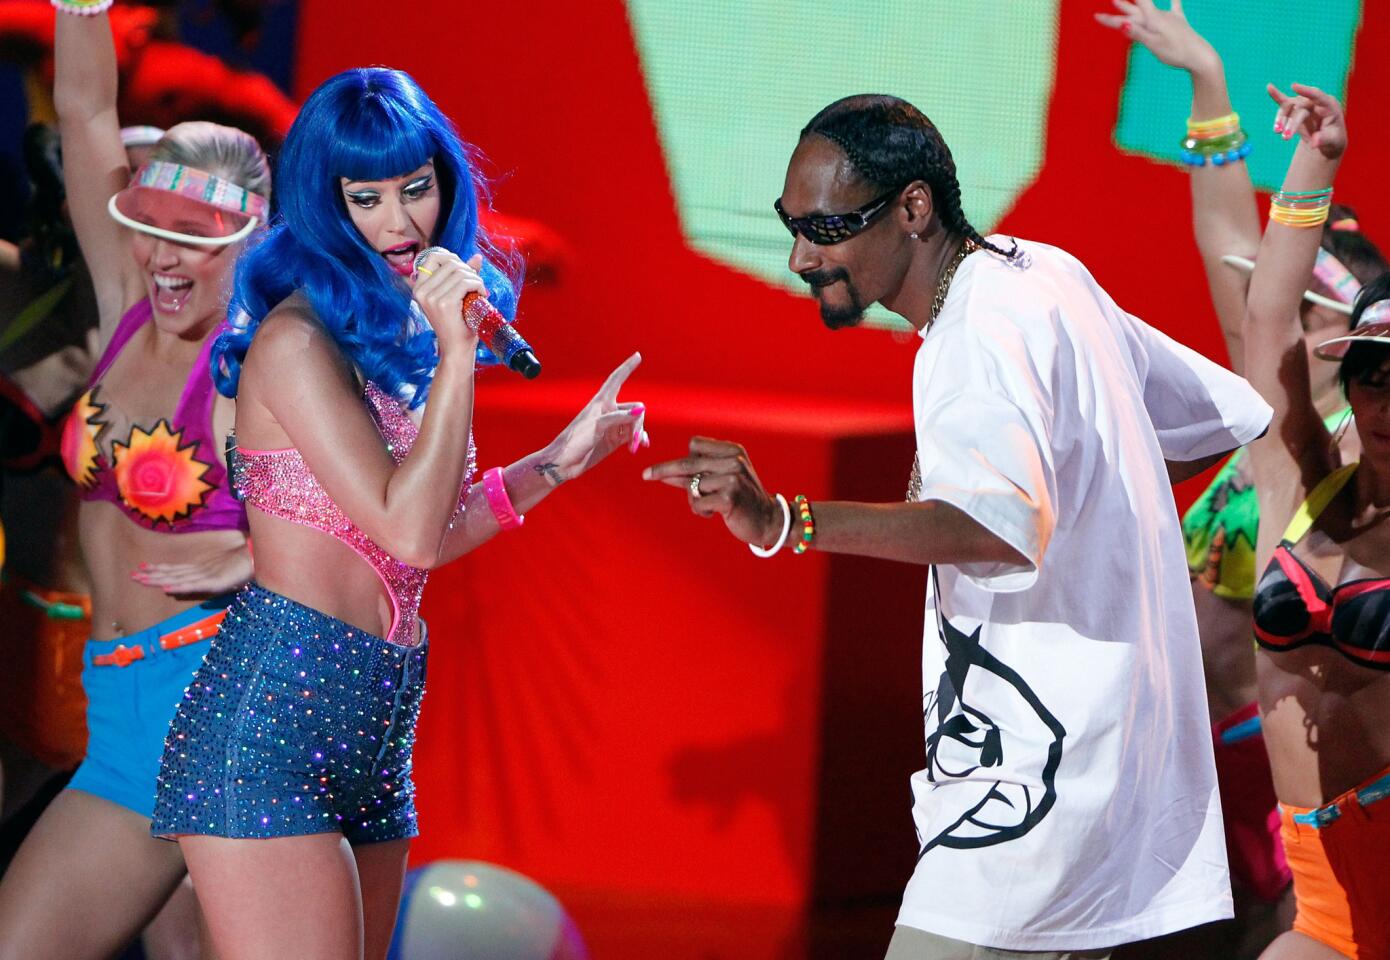 Katy Perry and Snoop Dogg: "California Gurls"